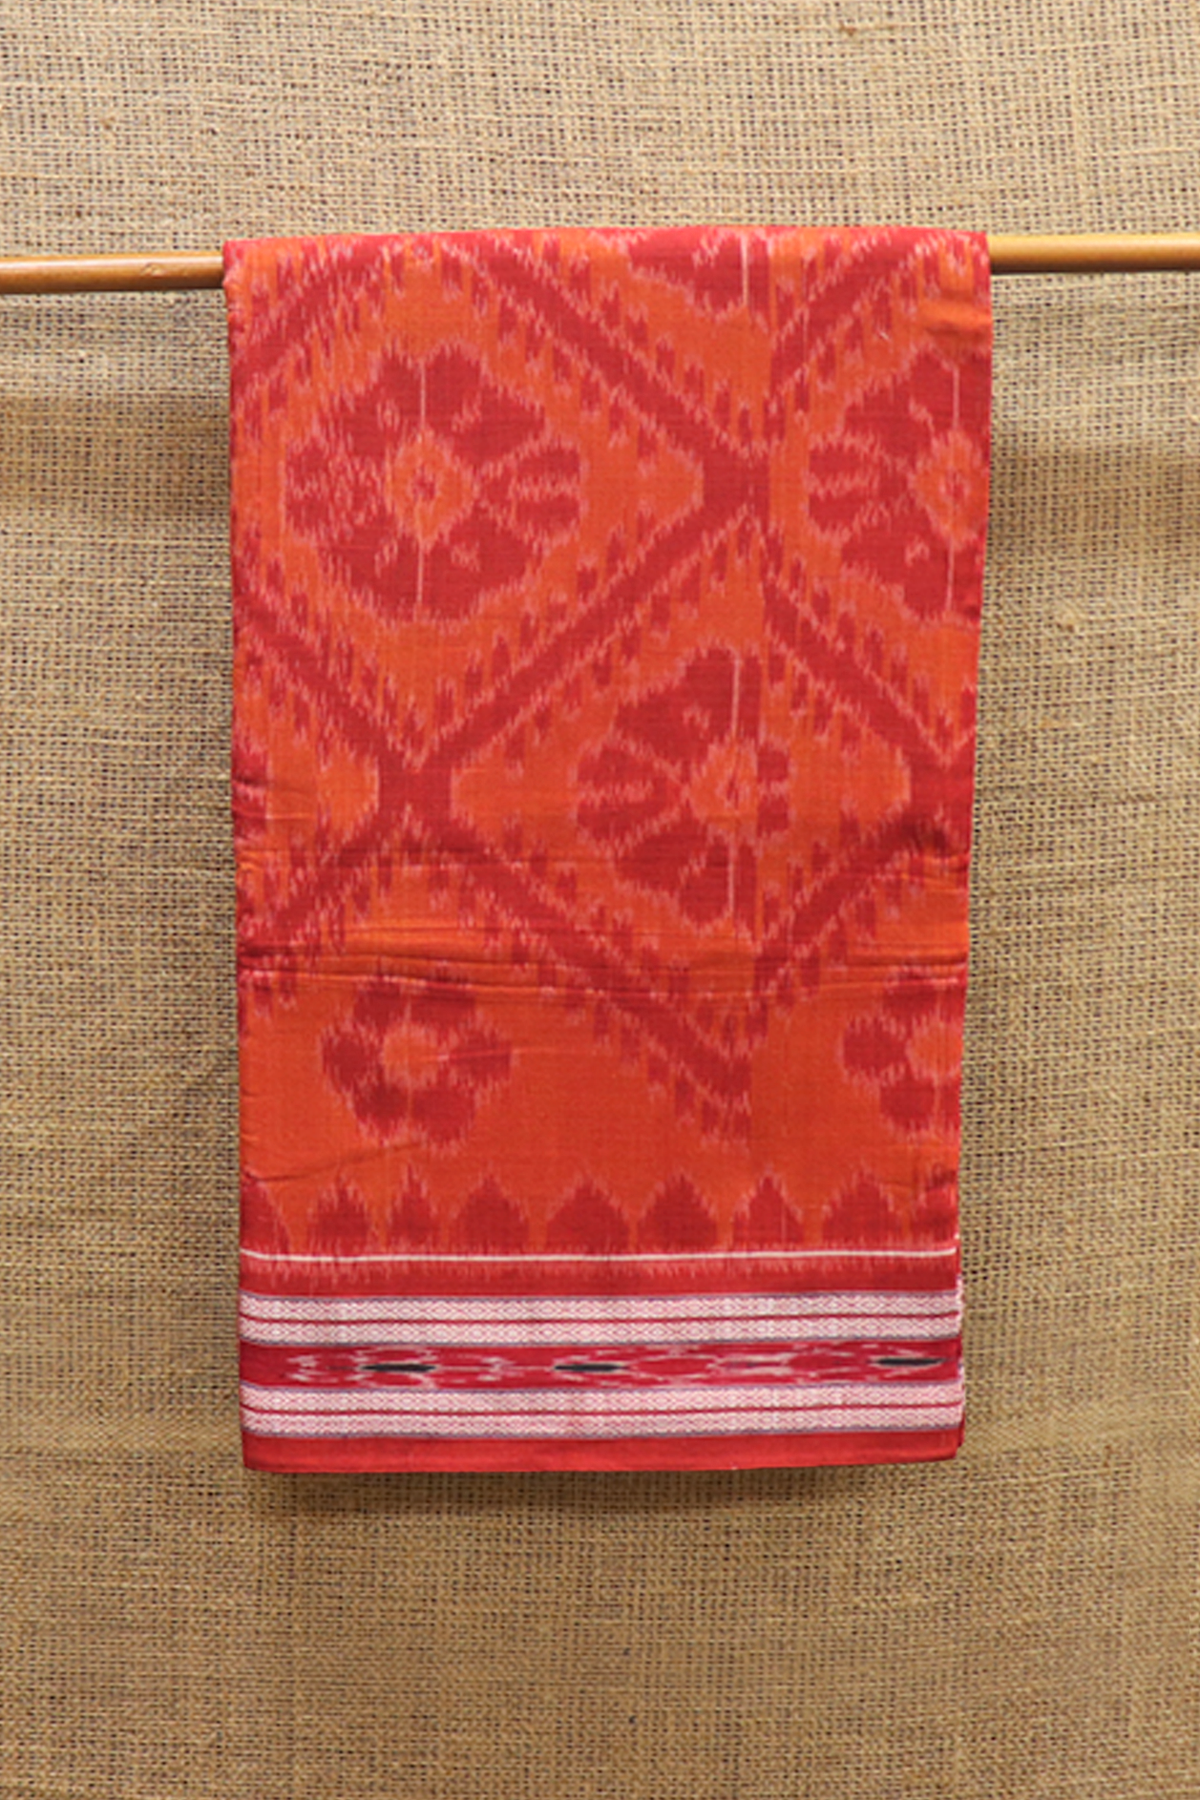 Allover Design Vermillion Red Ikat Cotton Saree